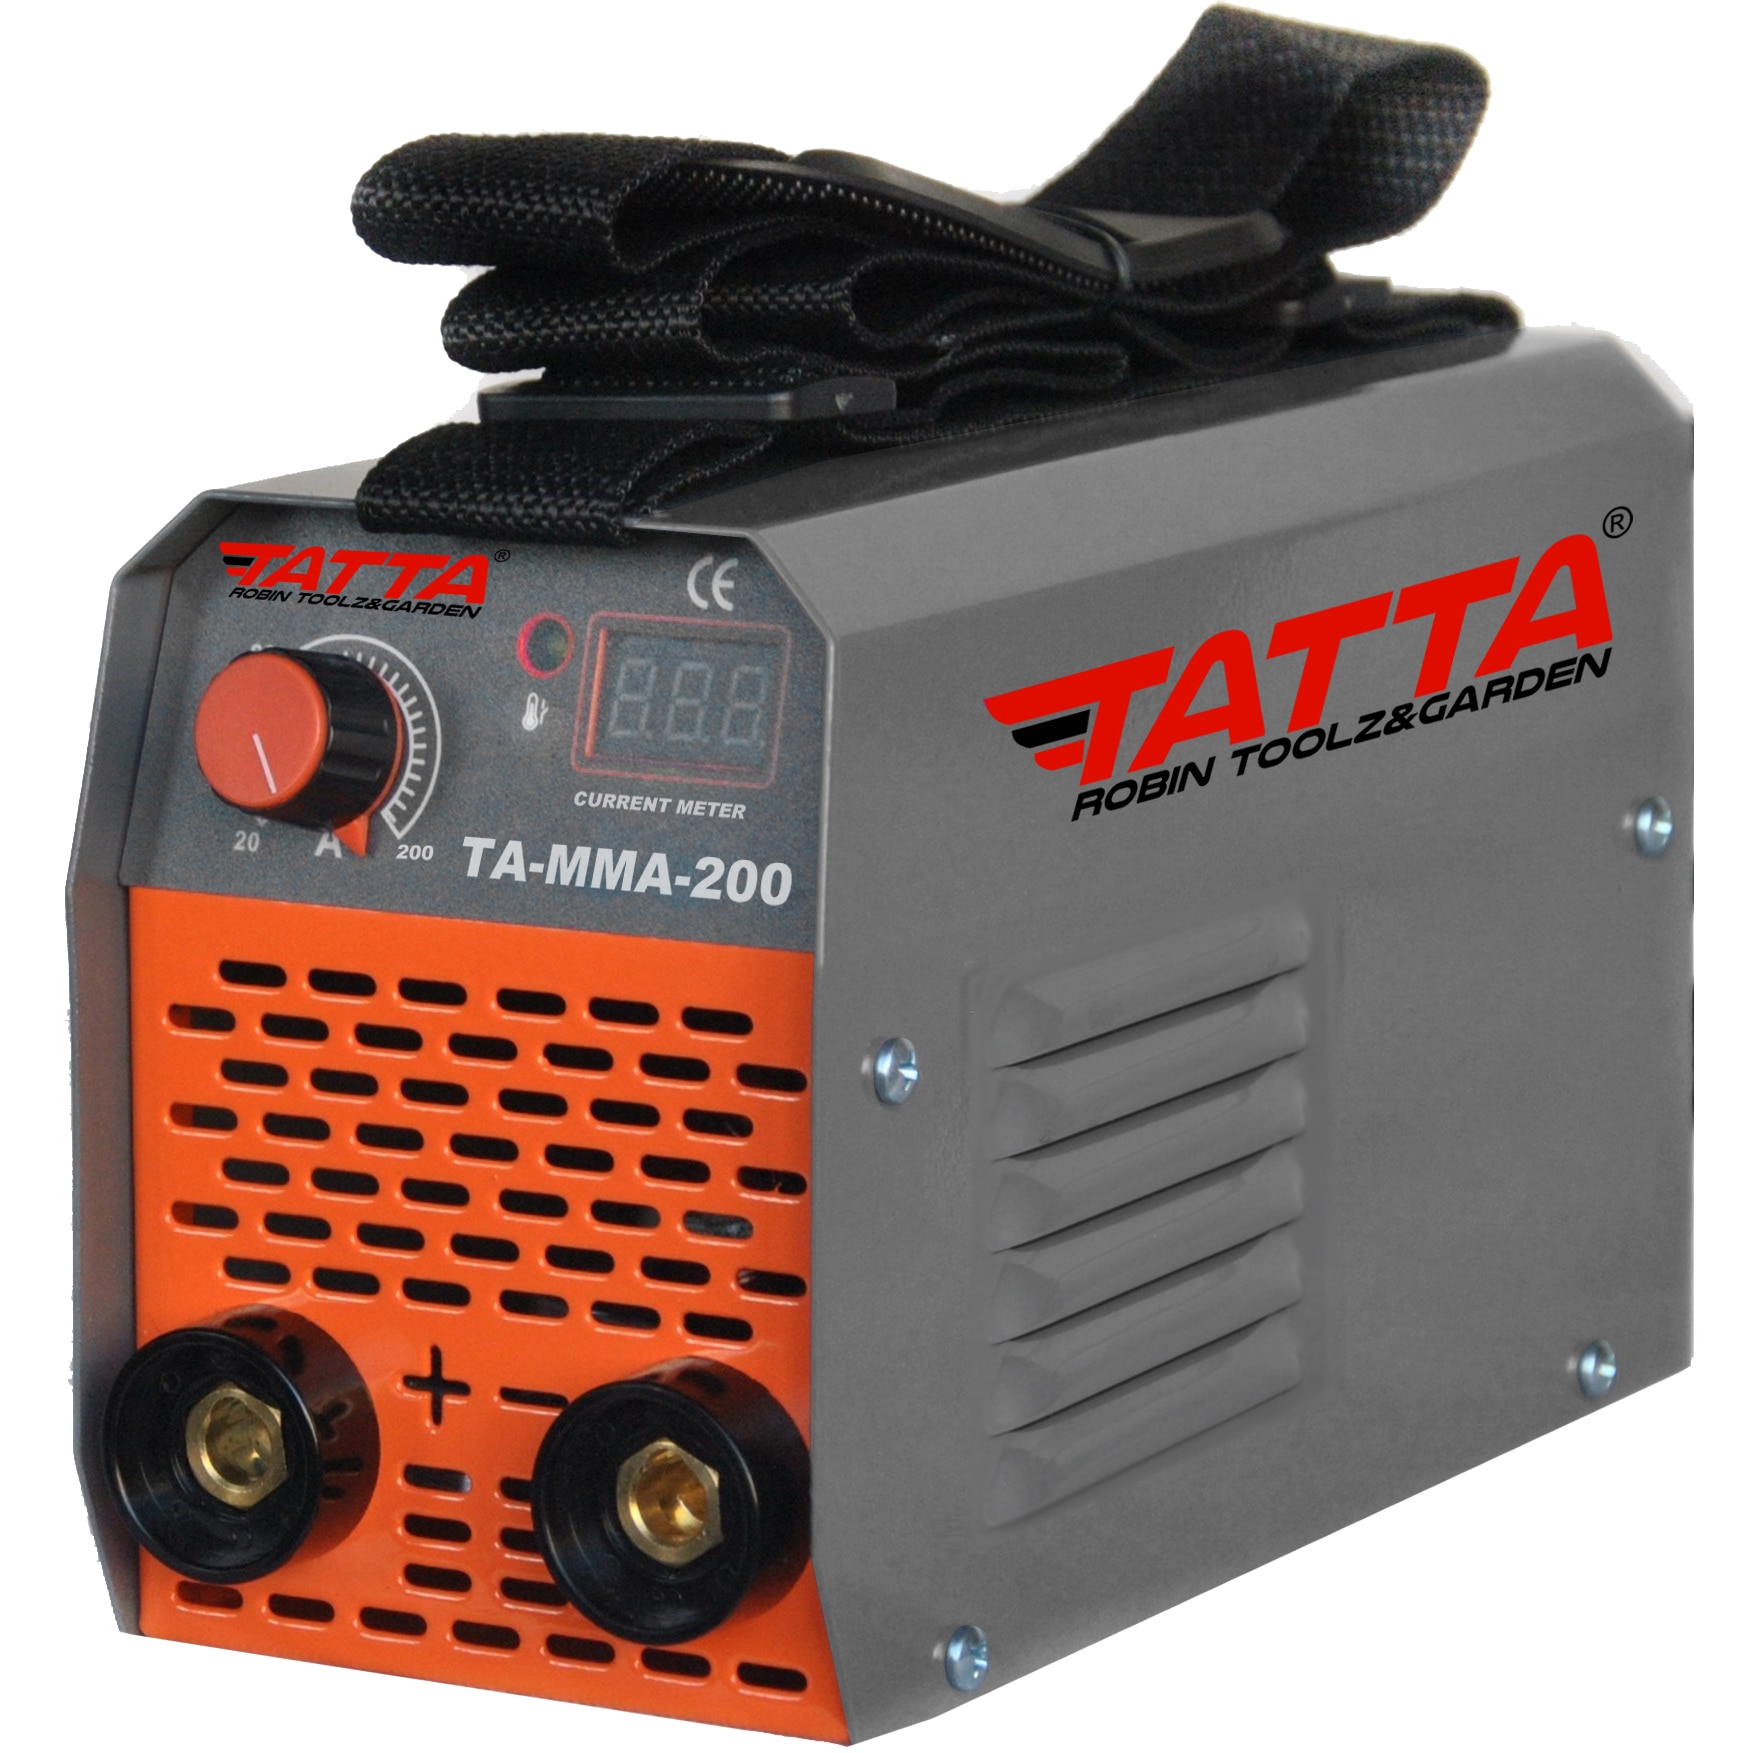 Fotografie Aparat de sudura Tatta TA-MMA-200, putere absorbita 7.1 kVA, eficienta85%, electrod 1.6-3.2 mm